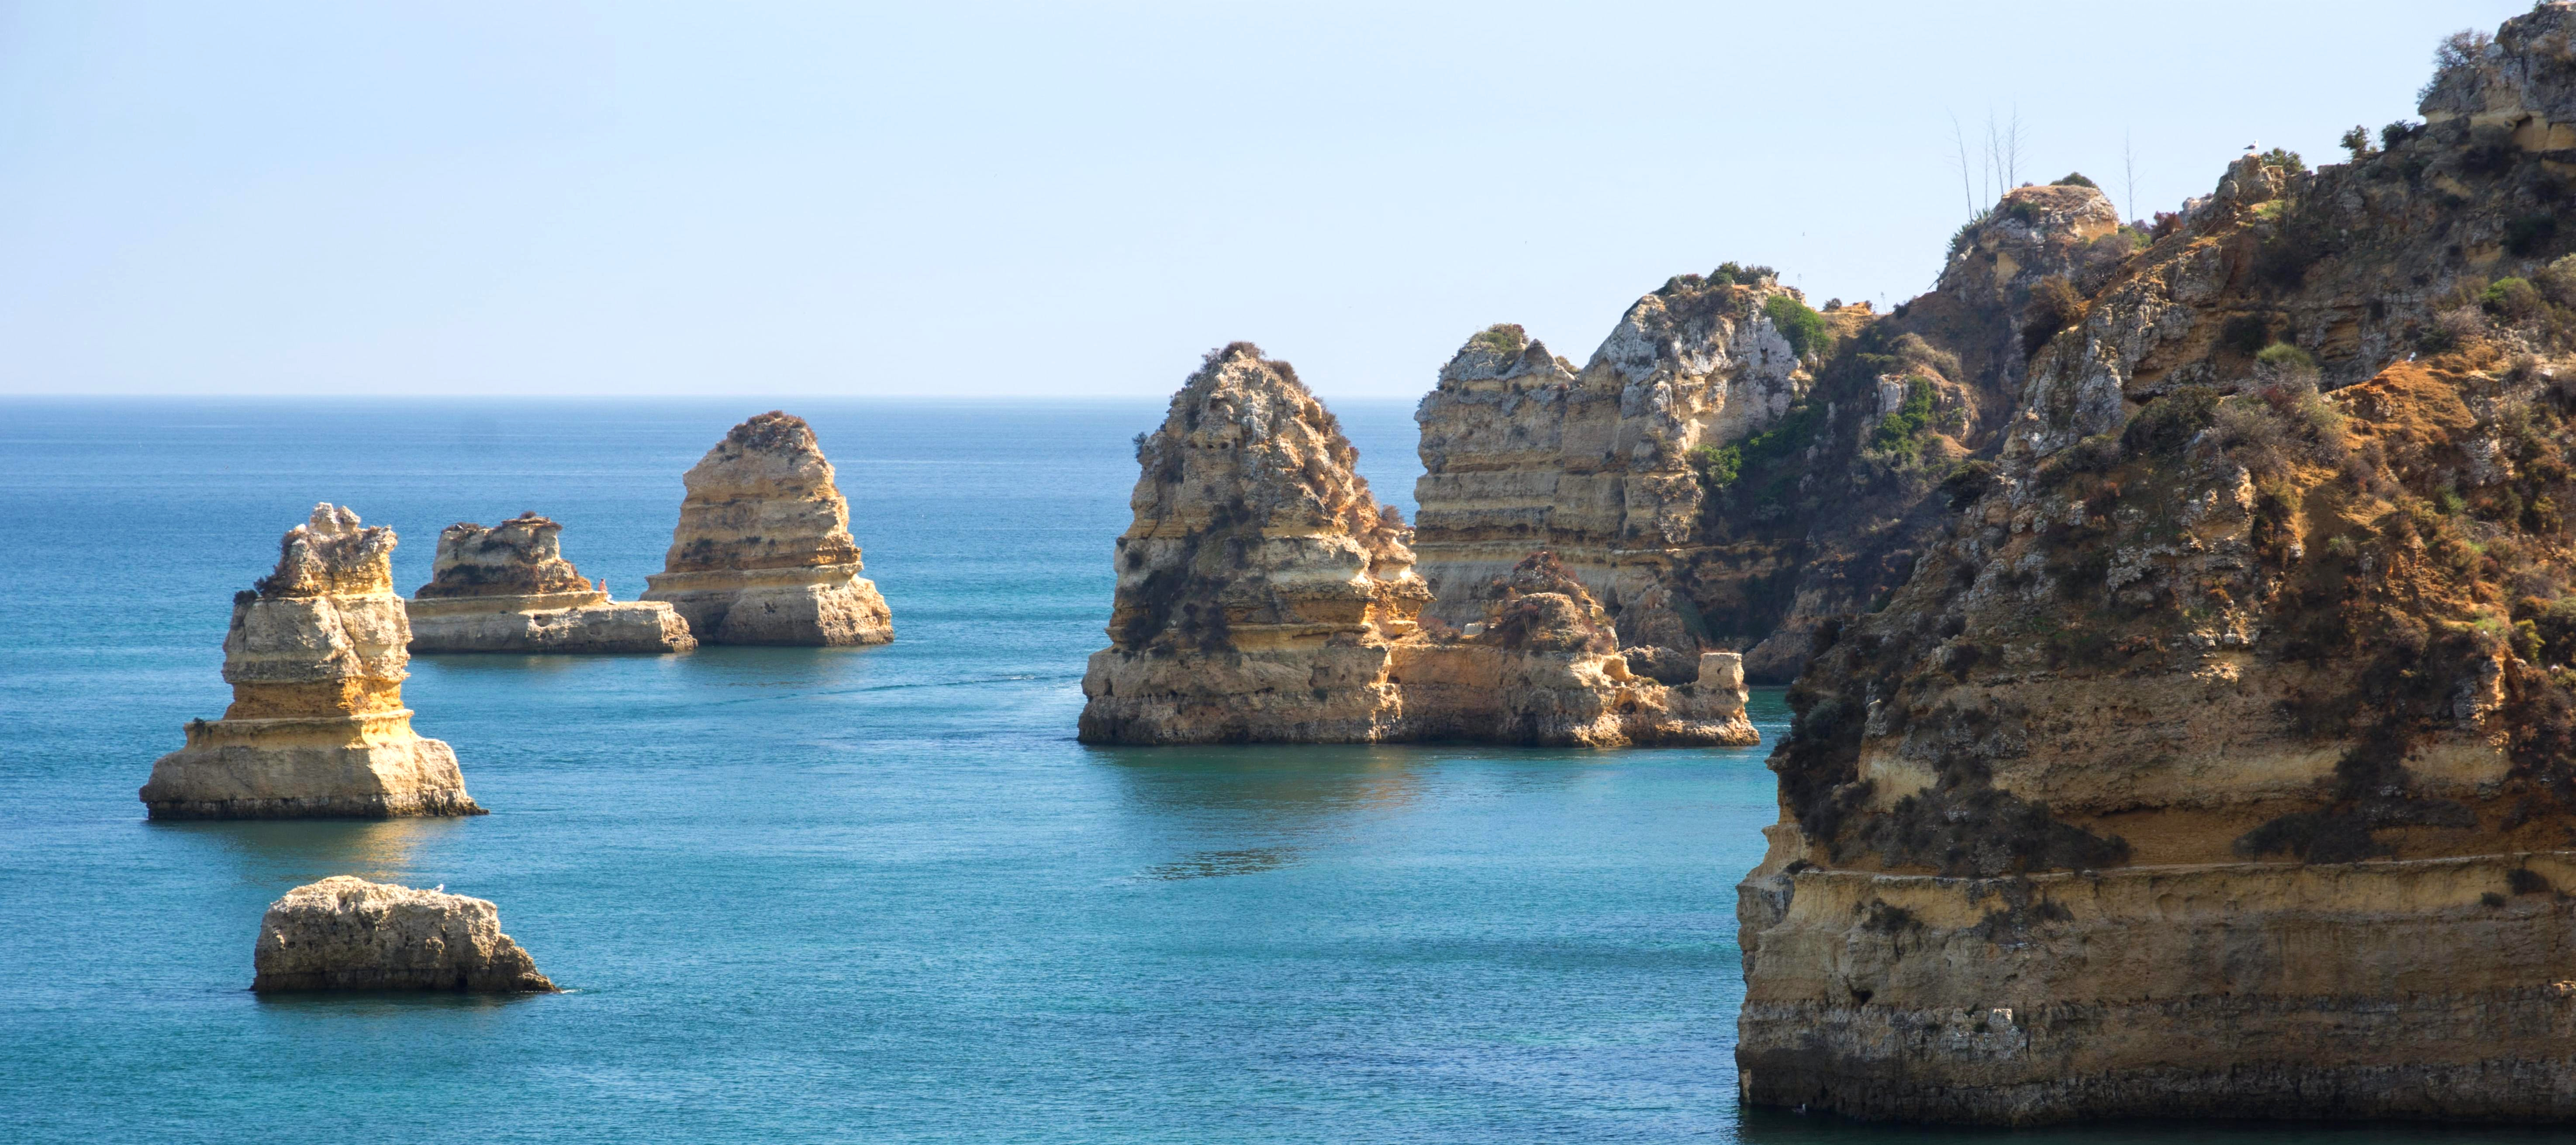 Algarve Cliffs - Featured Image